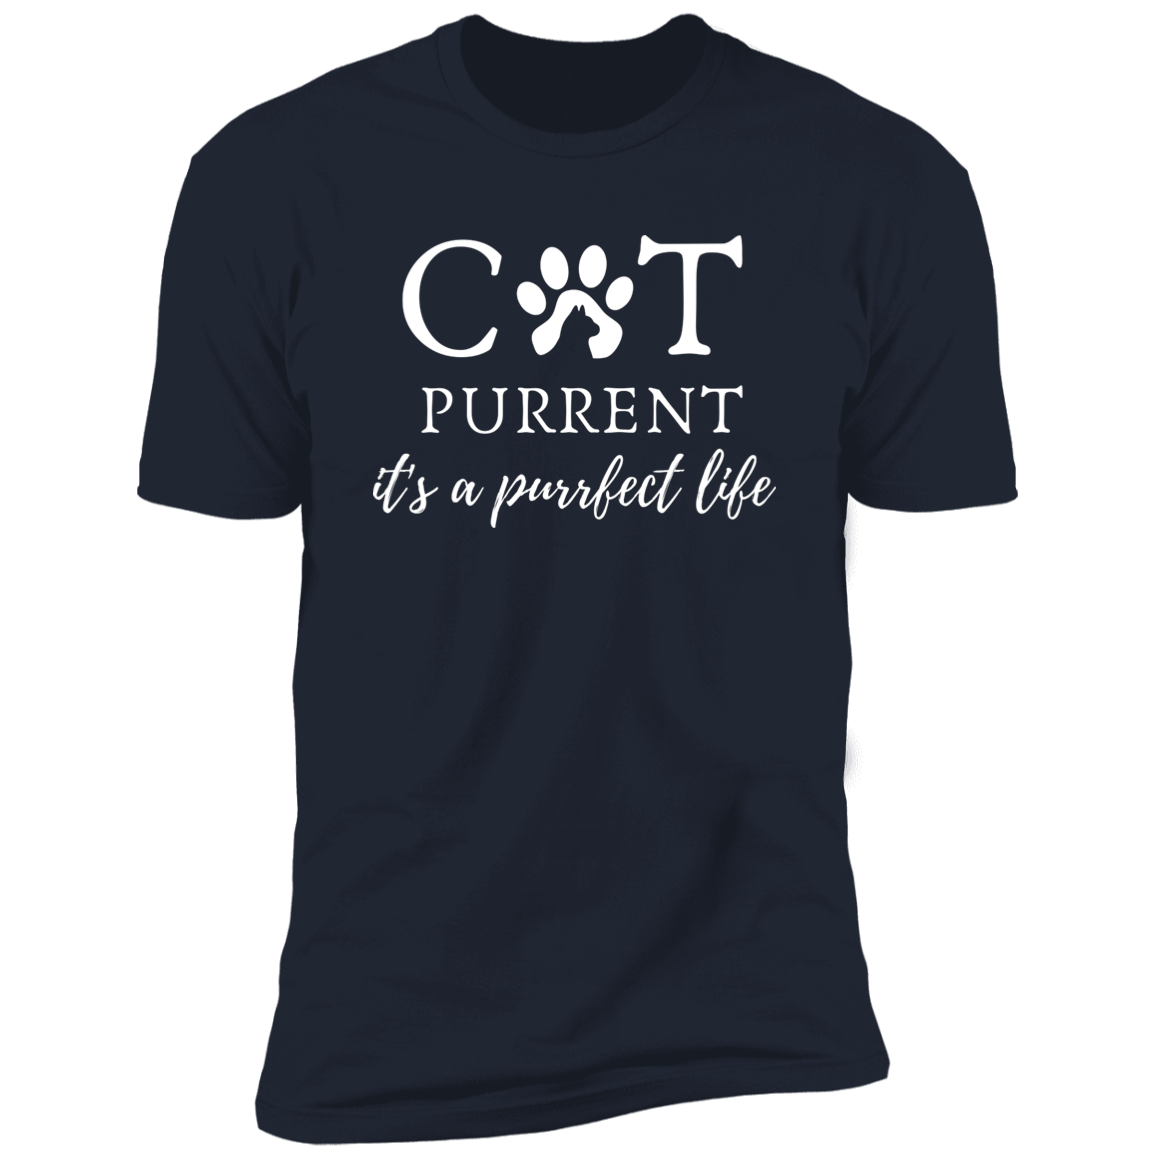 Cat Purrent It's a Purrfect Life T-shirt, Cat Parent Shirt for humans, in navy blue